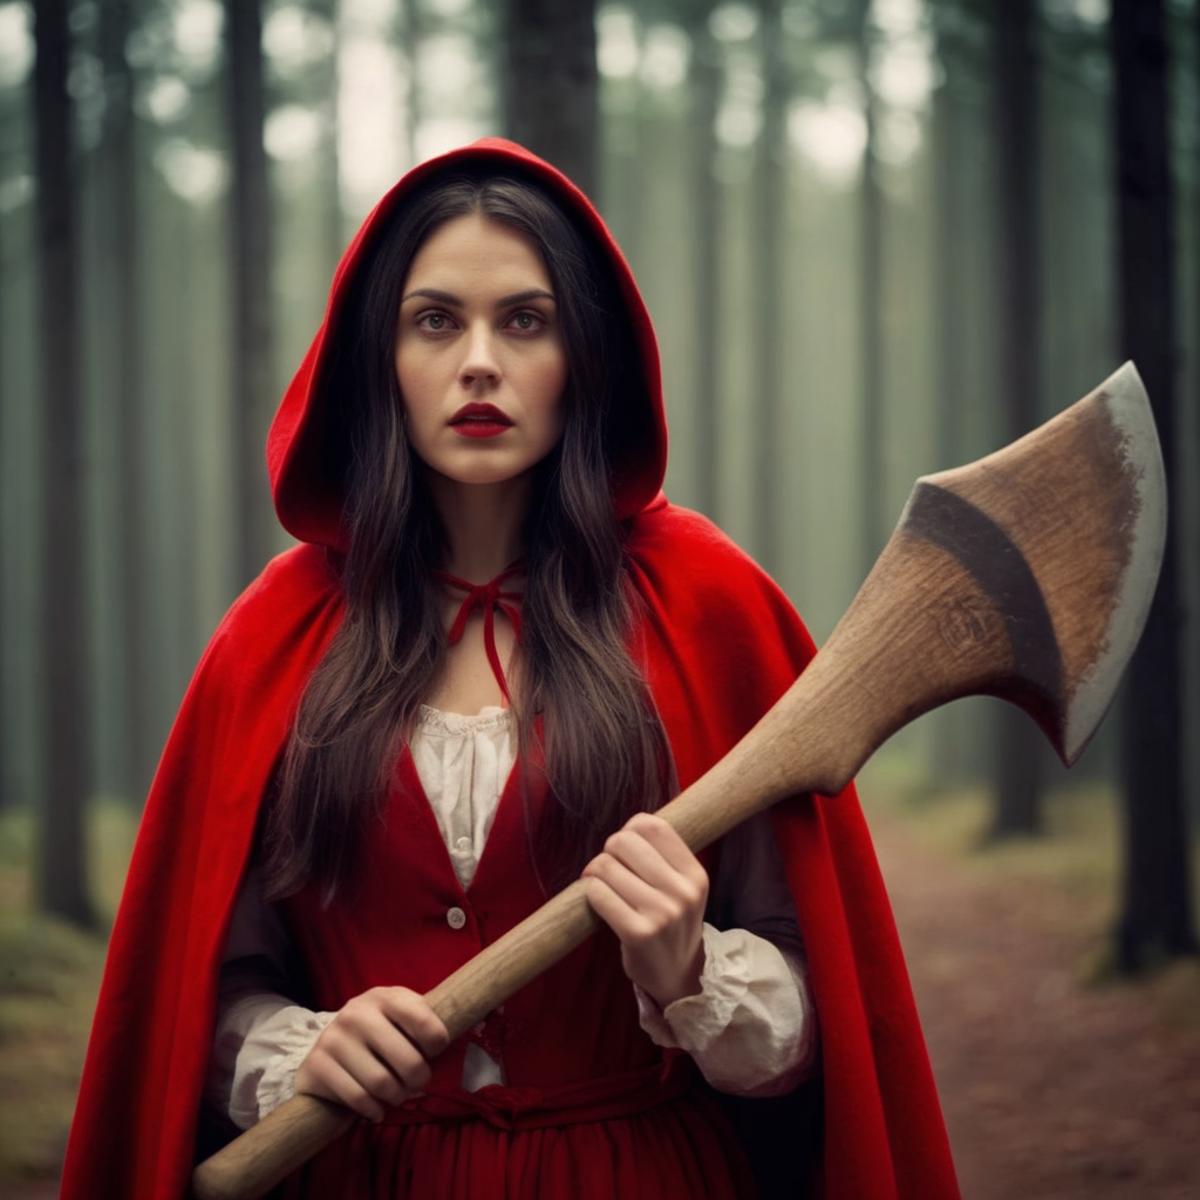 Little Red Riding Hood XL + SD1.5 image by vantablackdark